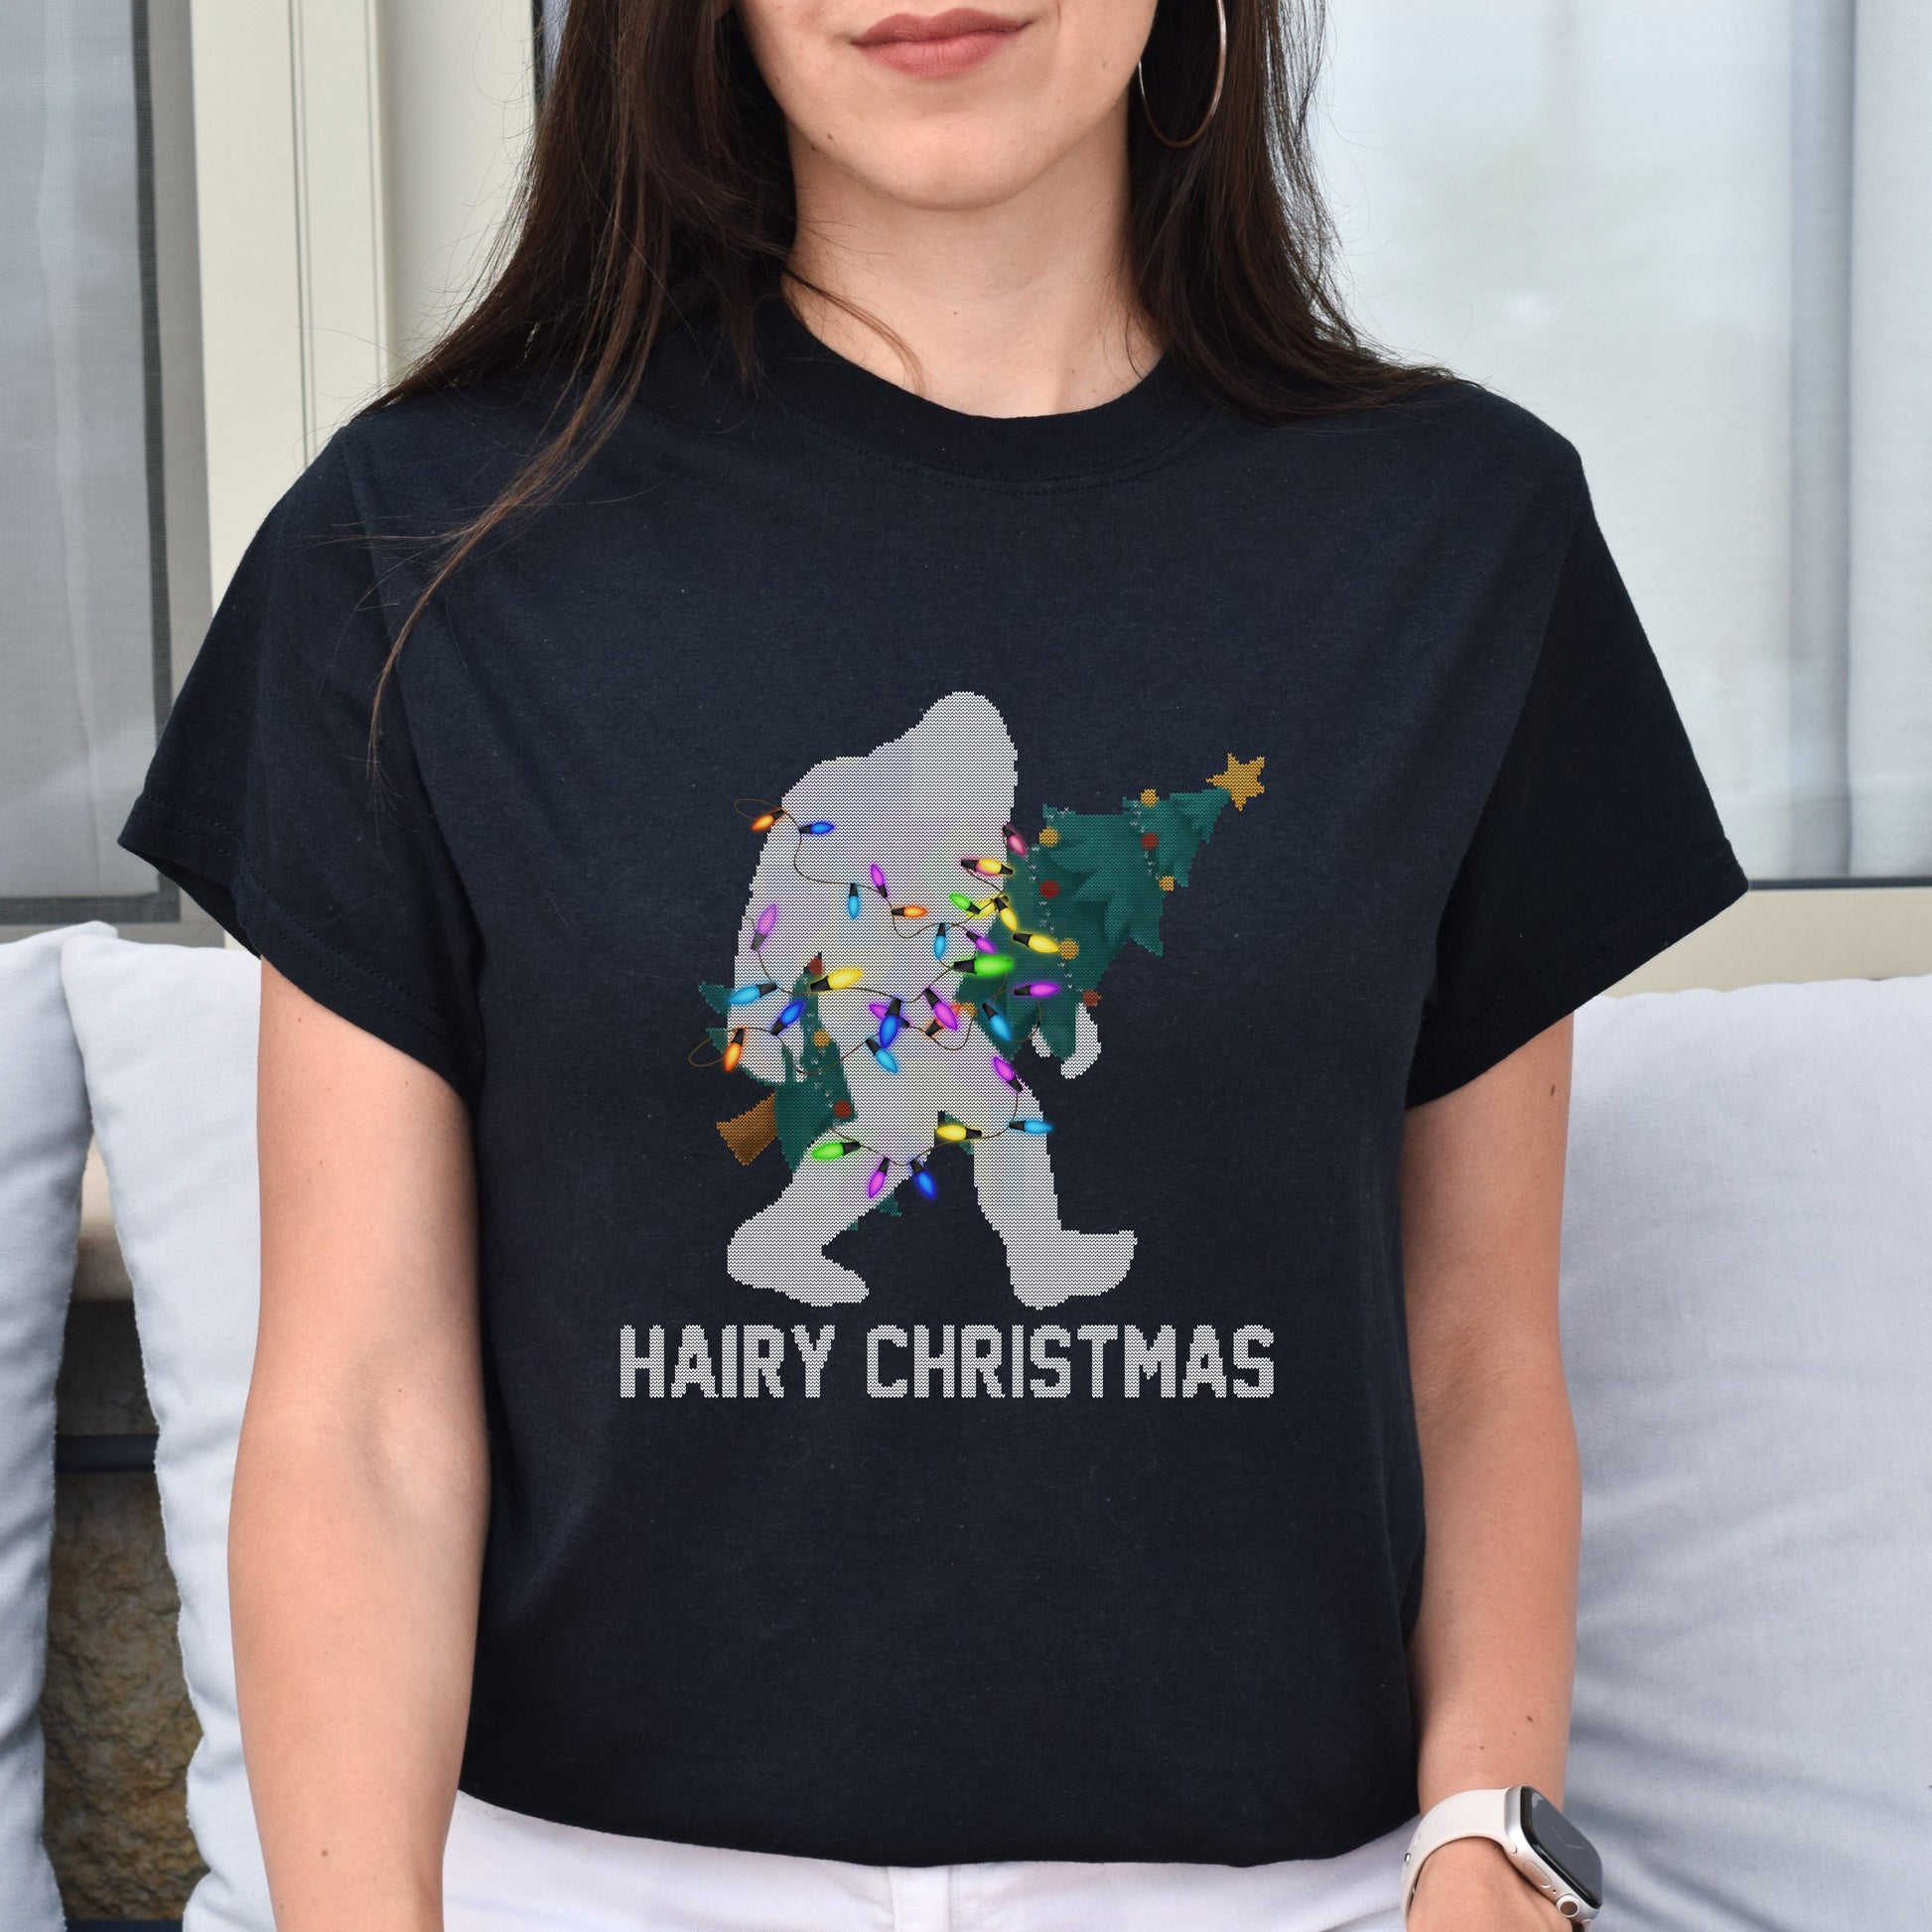 Hairy Christmas Unisex shirt Big foot Holiday tee Black Dark Heather-Black-Family-Gift-Planet